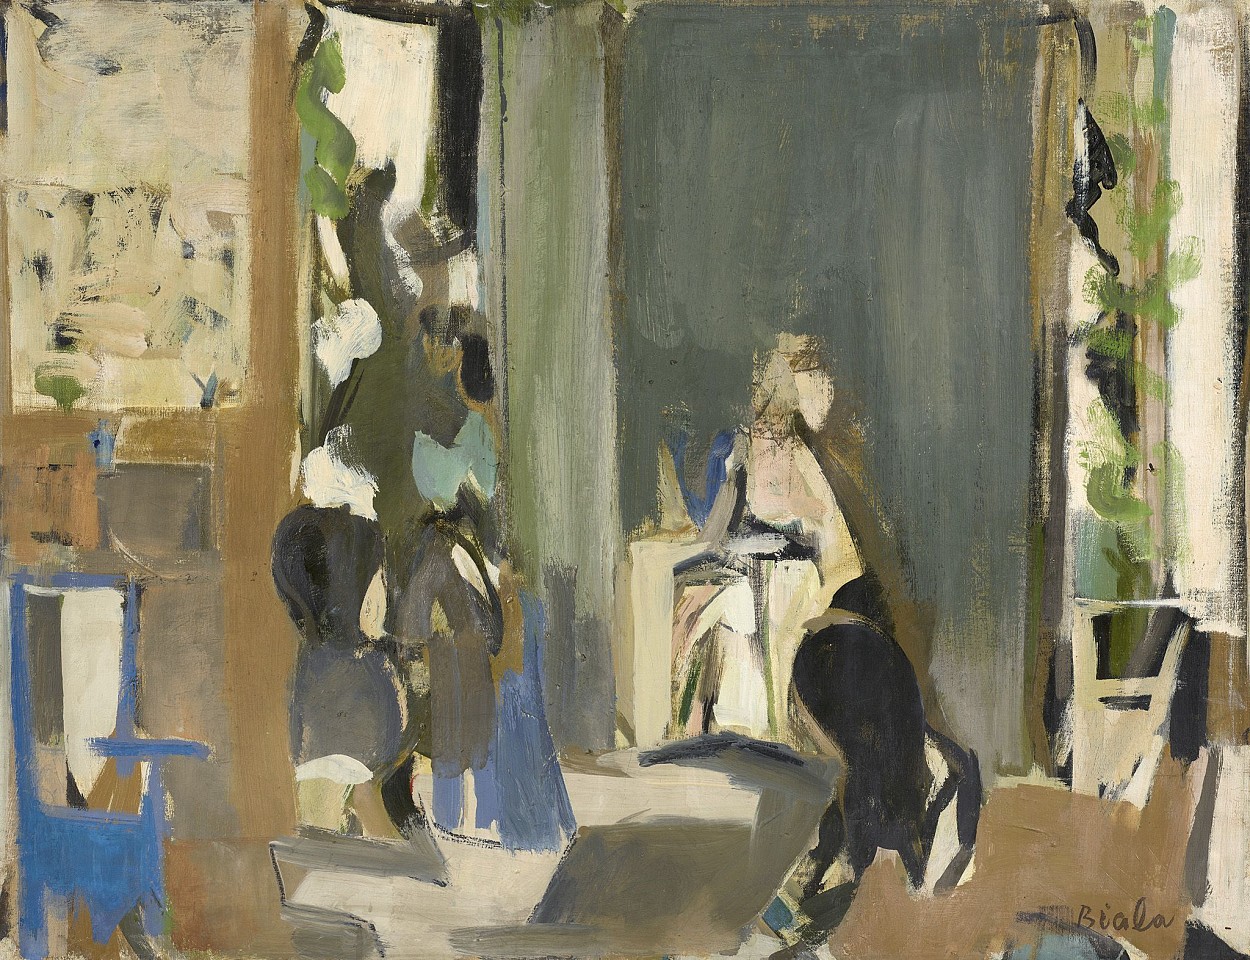 Janice Biala, Hermine á Peapack, 1957
Oil on canvas, 26 x 34 in. (66 x 86.4 cm)
BIAL-00012